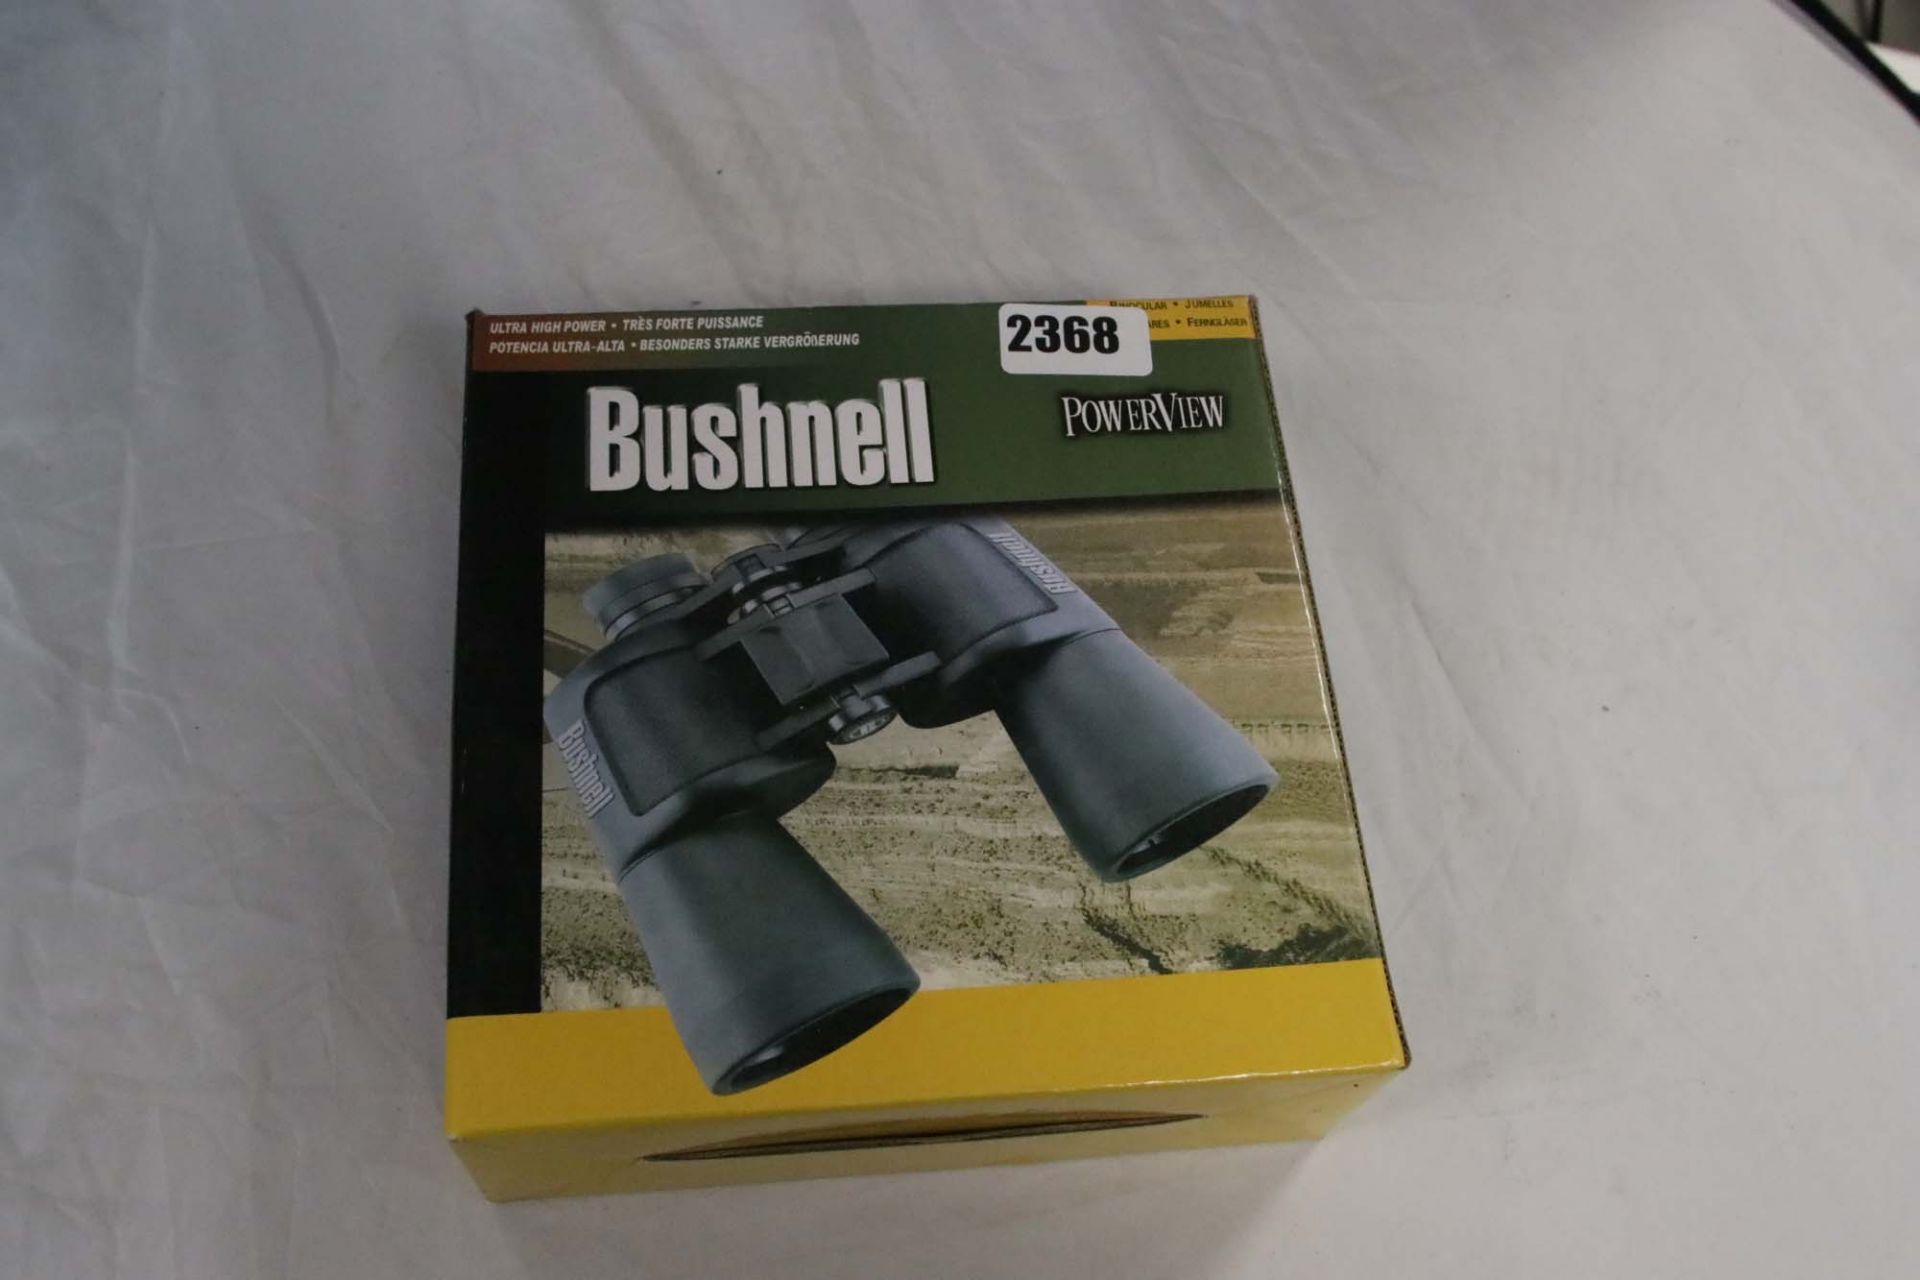 (4) Pair of Bushnell Power View binoculars